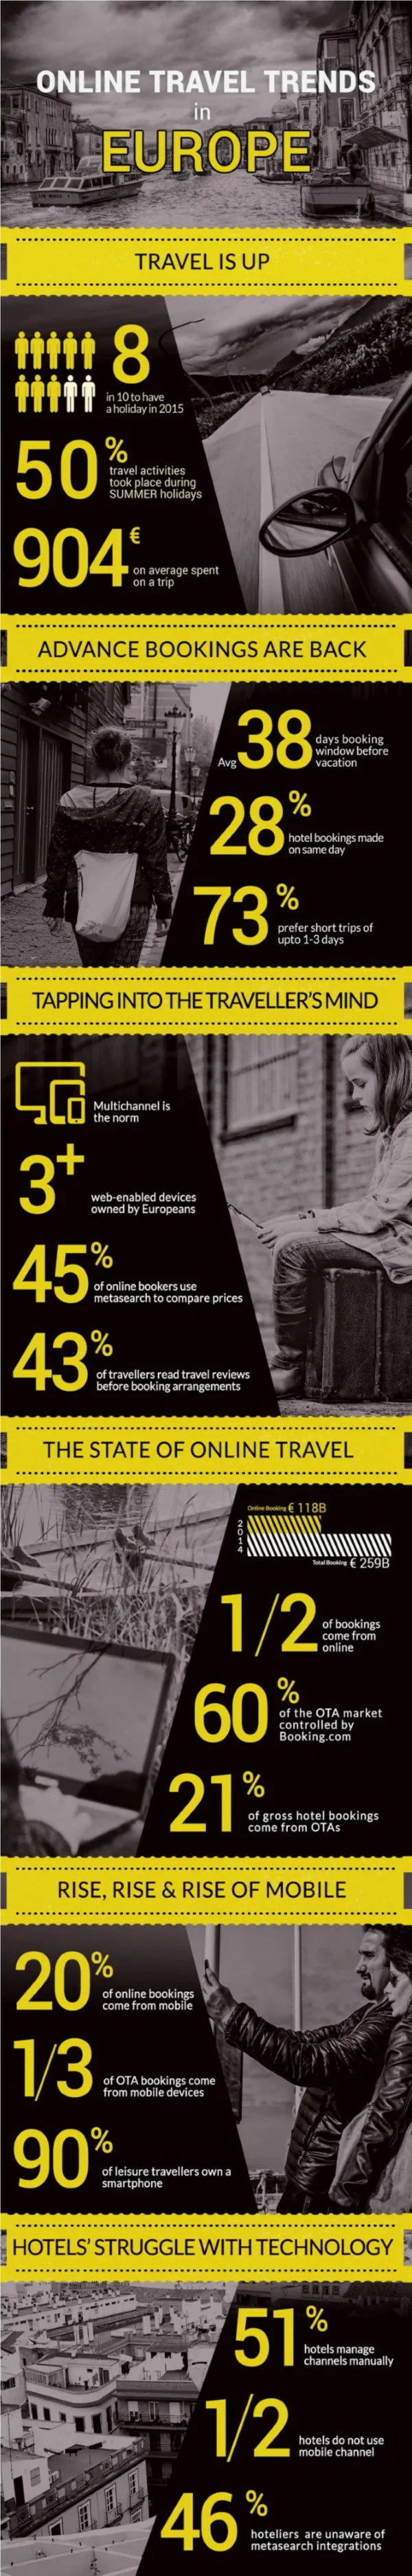 Online Travel Trends in Europe 2015